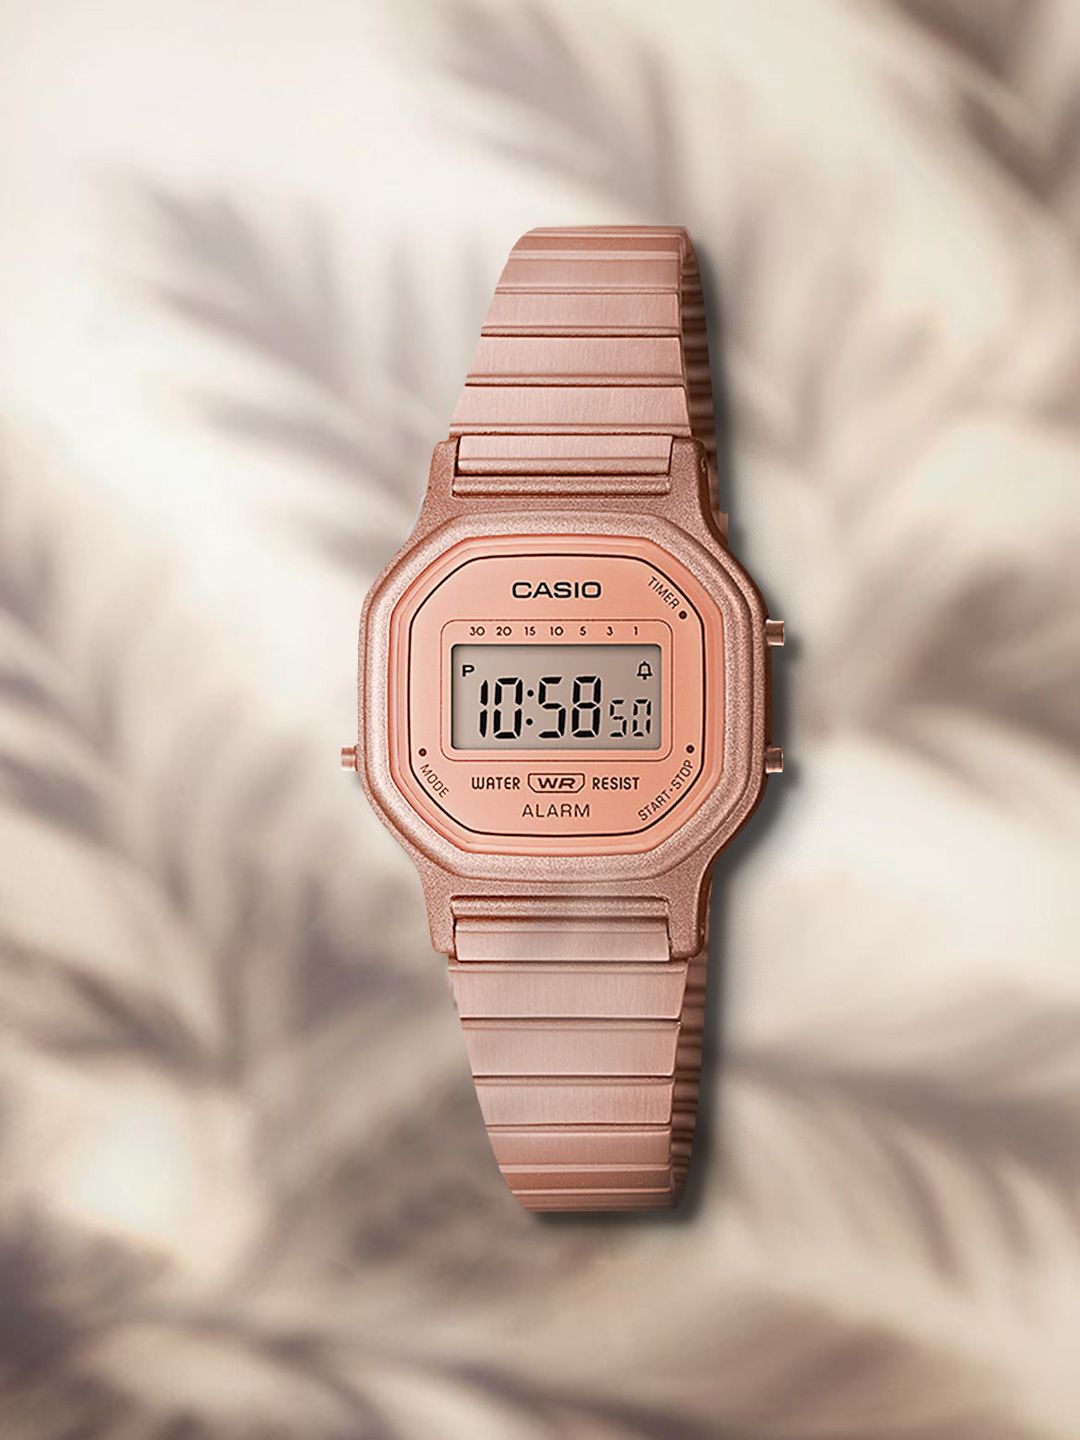 CASIO Unisex Rose Gold Digital Watch D217 Price in India